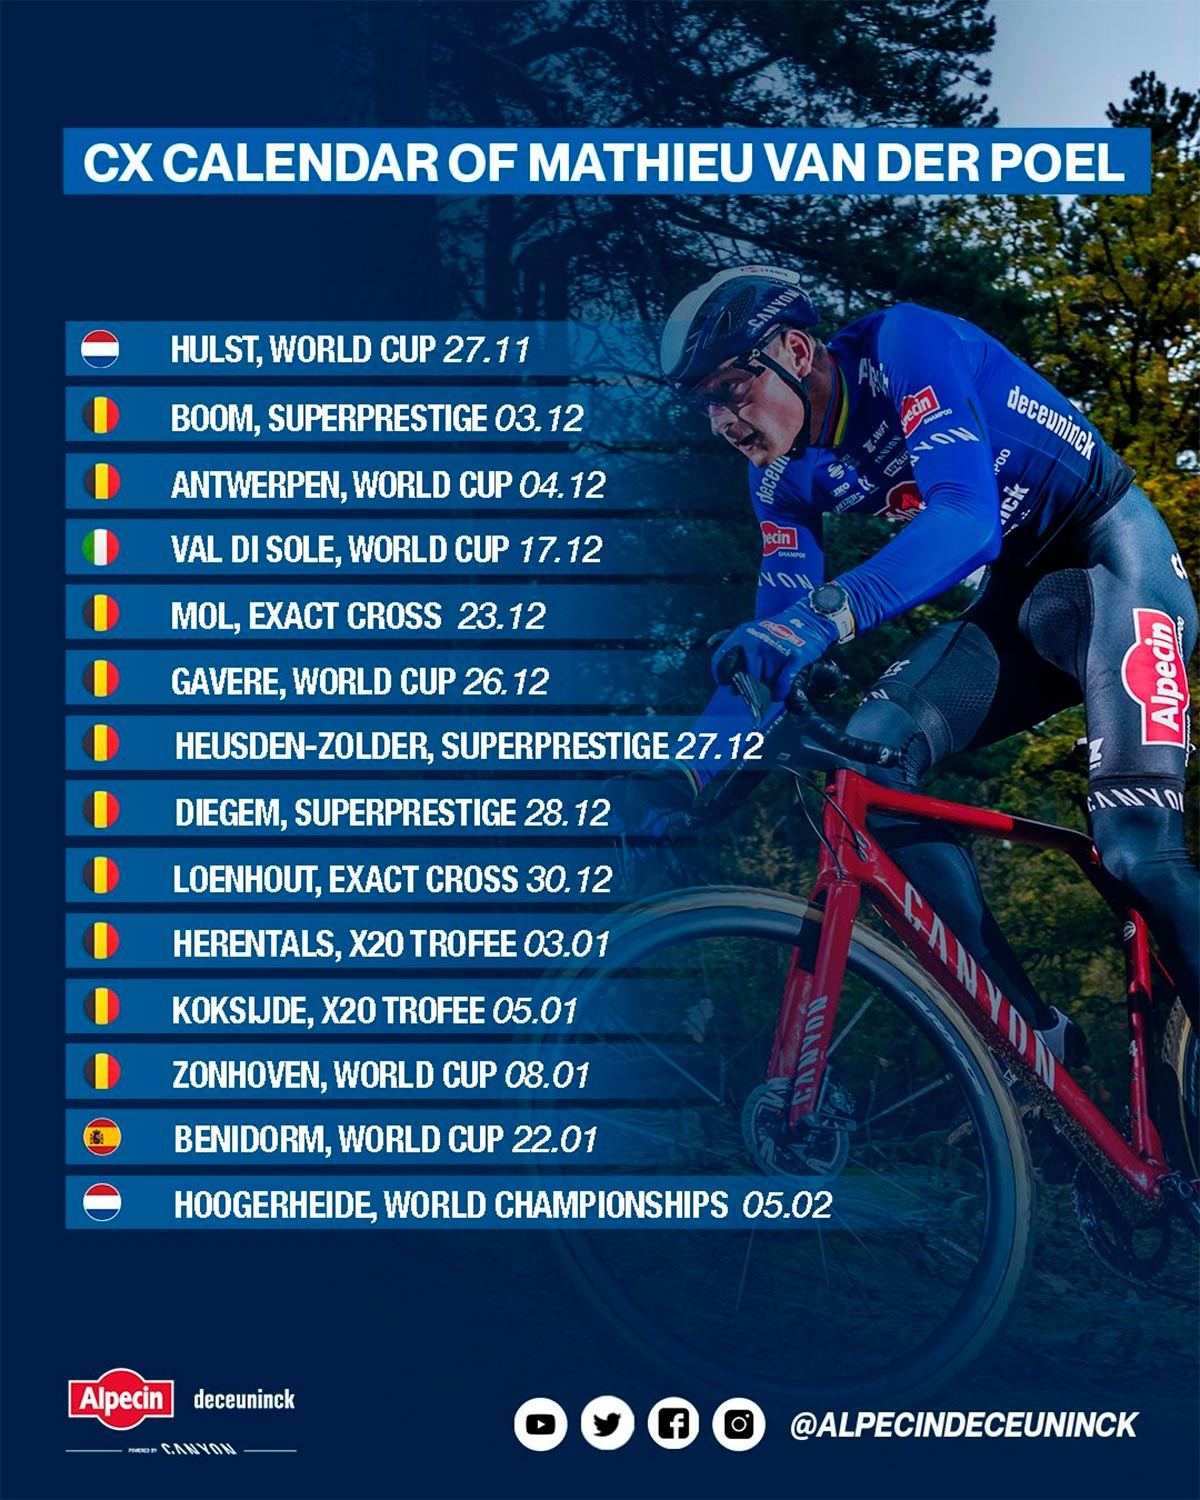 Mathieu Van Der Poel está de vuelta con un calendario de Ciclocross que arranca este mismo mes